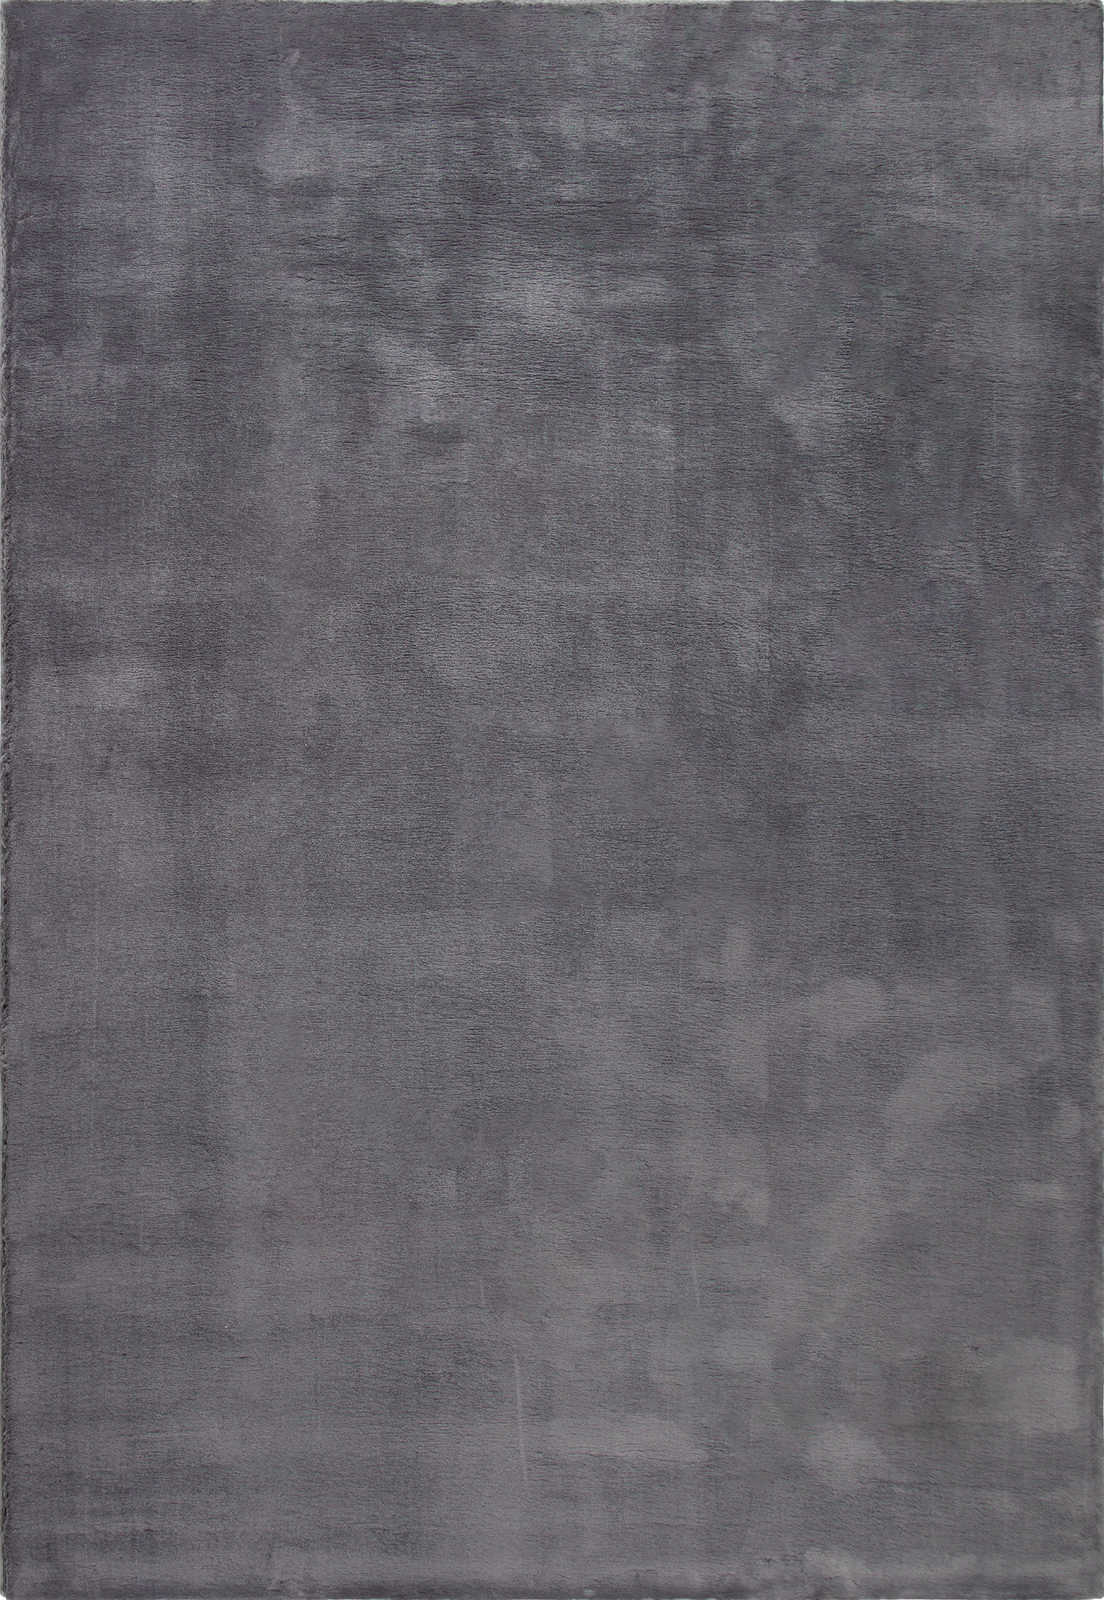             Tapis moderne à poils longs anthracite - 170 x 120 cm
        